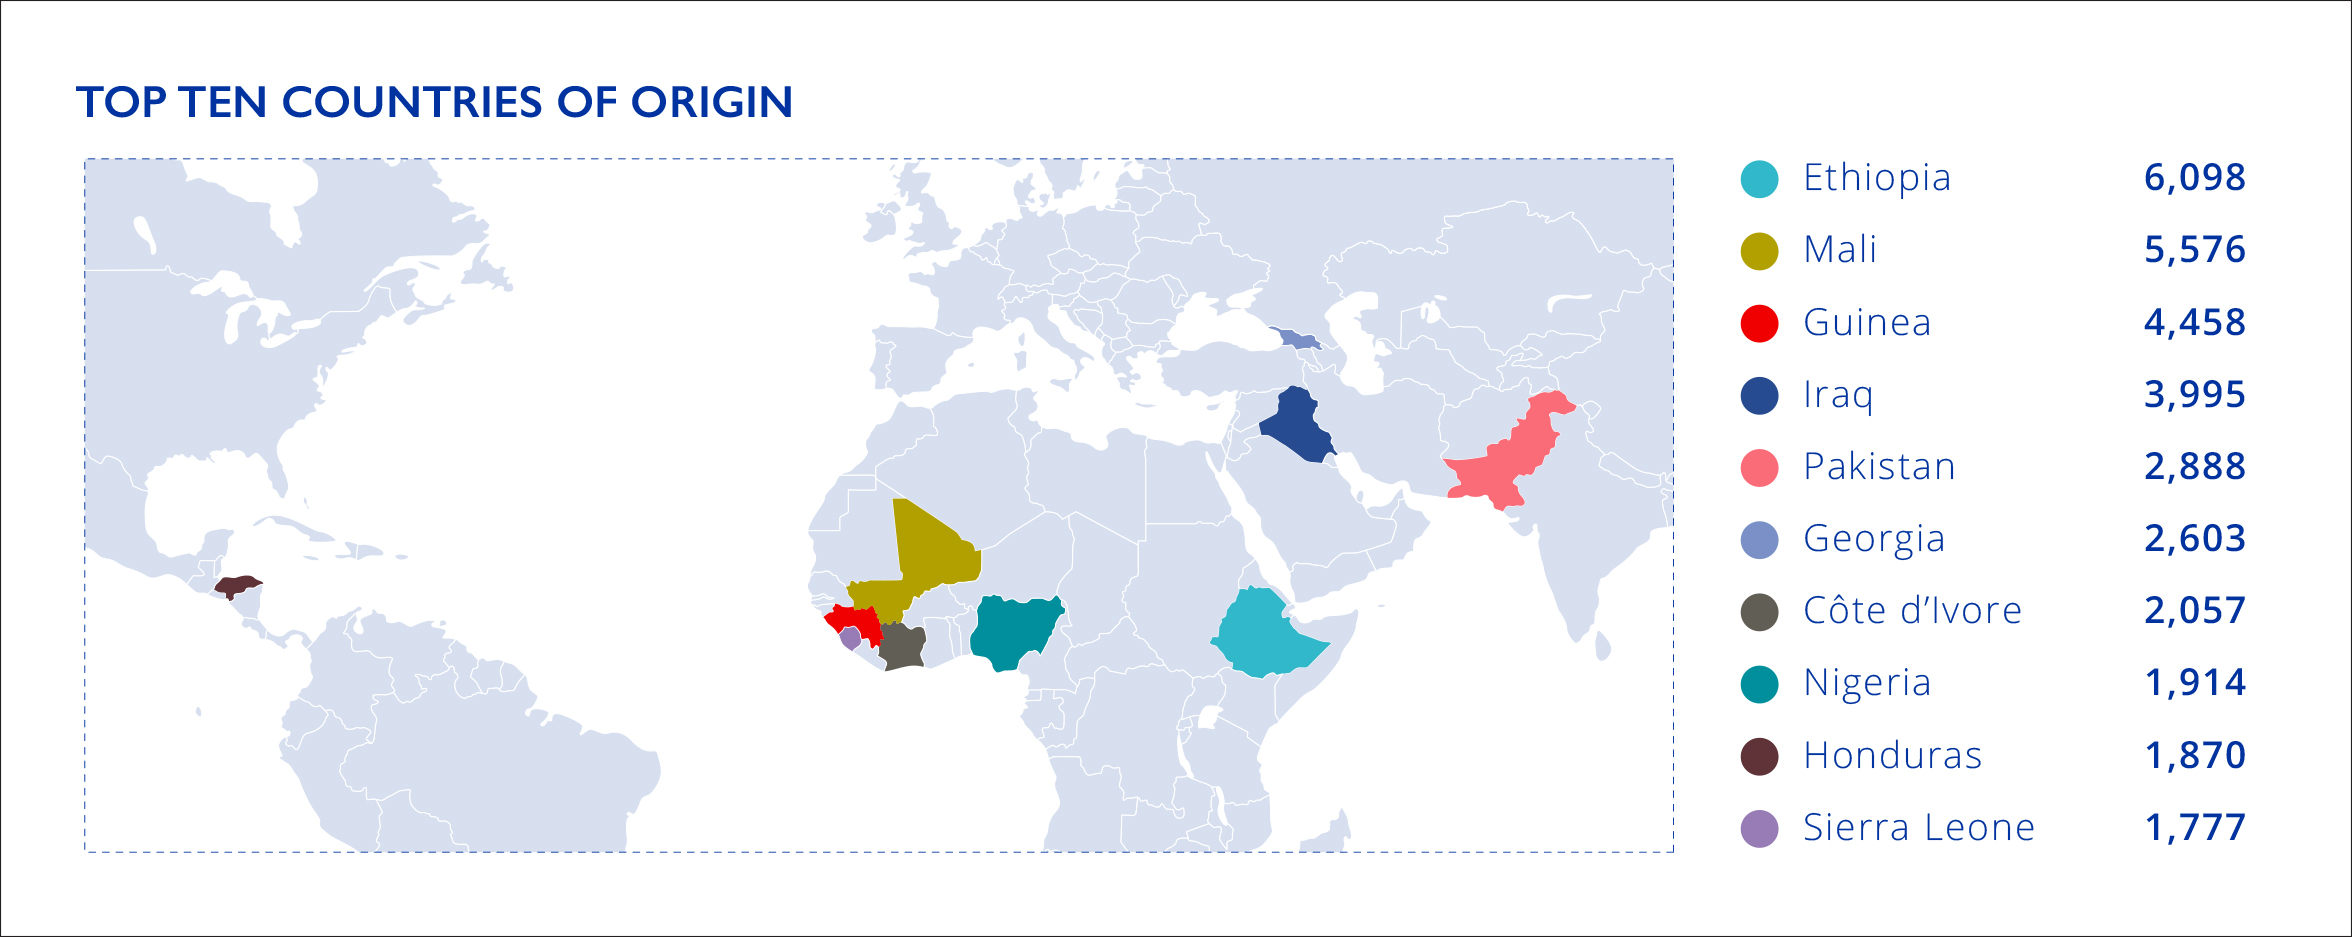 return-and-reintegration-chart_countries-of-origin_pbn_20200707